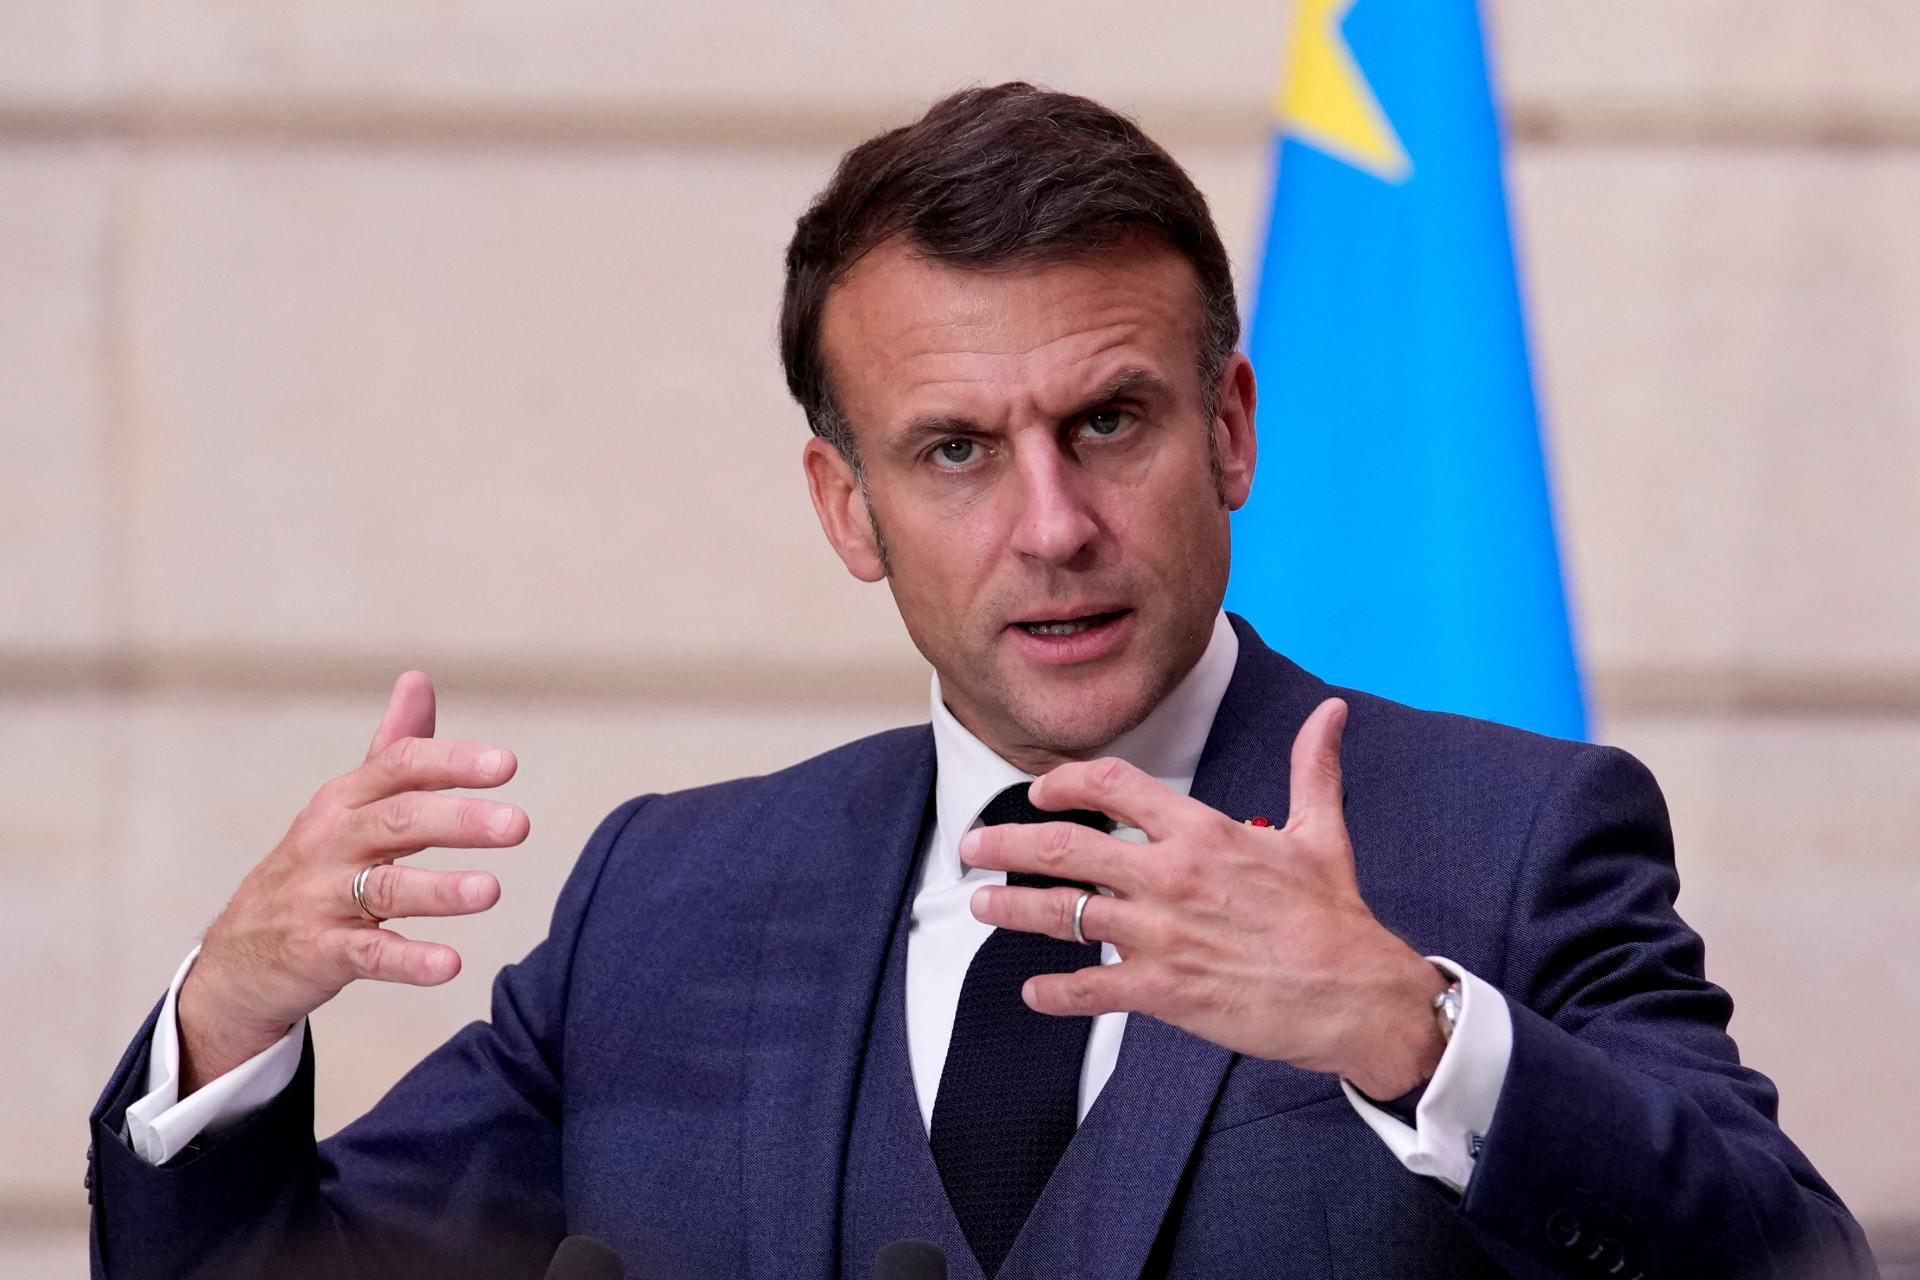 Ak by Rusko prelomilo front, je možné vyslať na Ukrajinu vojakov, vyhlásil Macron